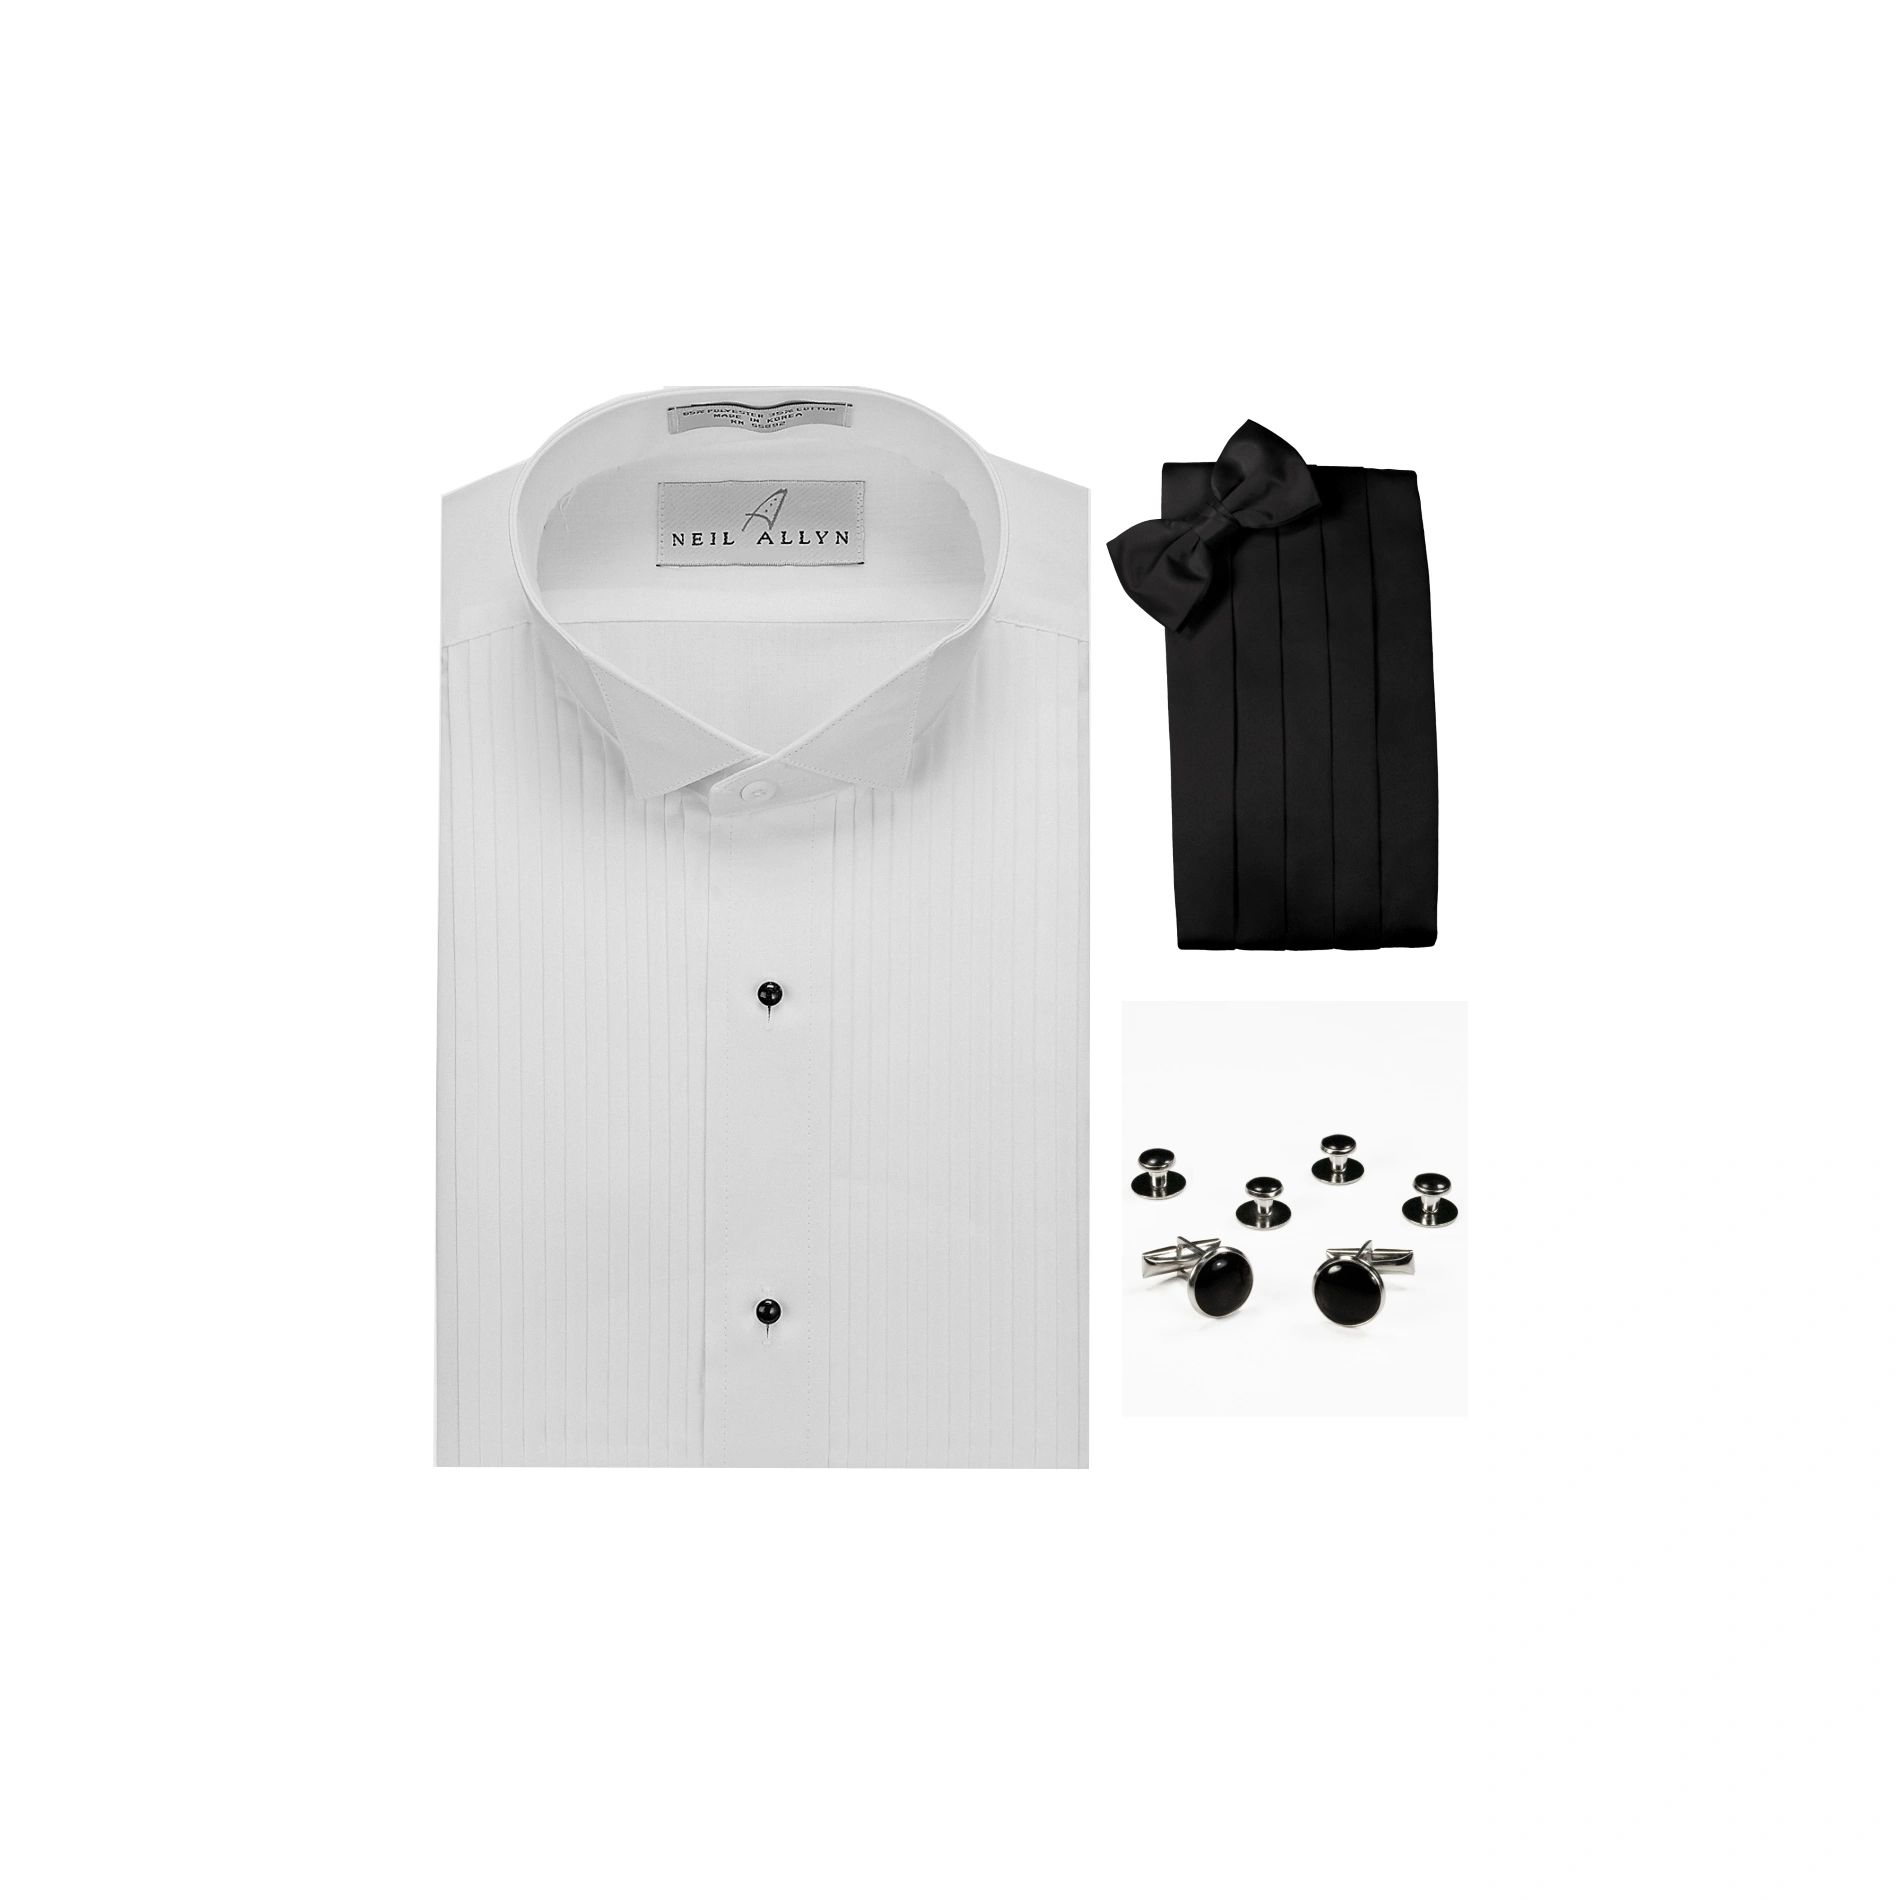 Neil Allyn Wing Collar 1/4" Pleats Formal Tuxedo Shirt, Cummerbund, Bow-Tie, Cuff Links & Studs Set